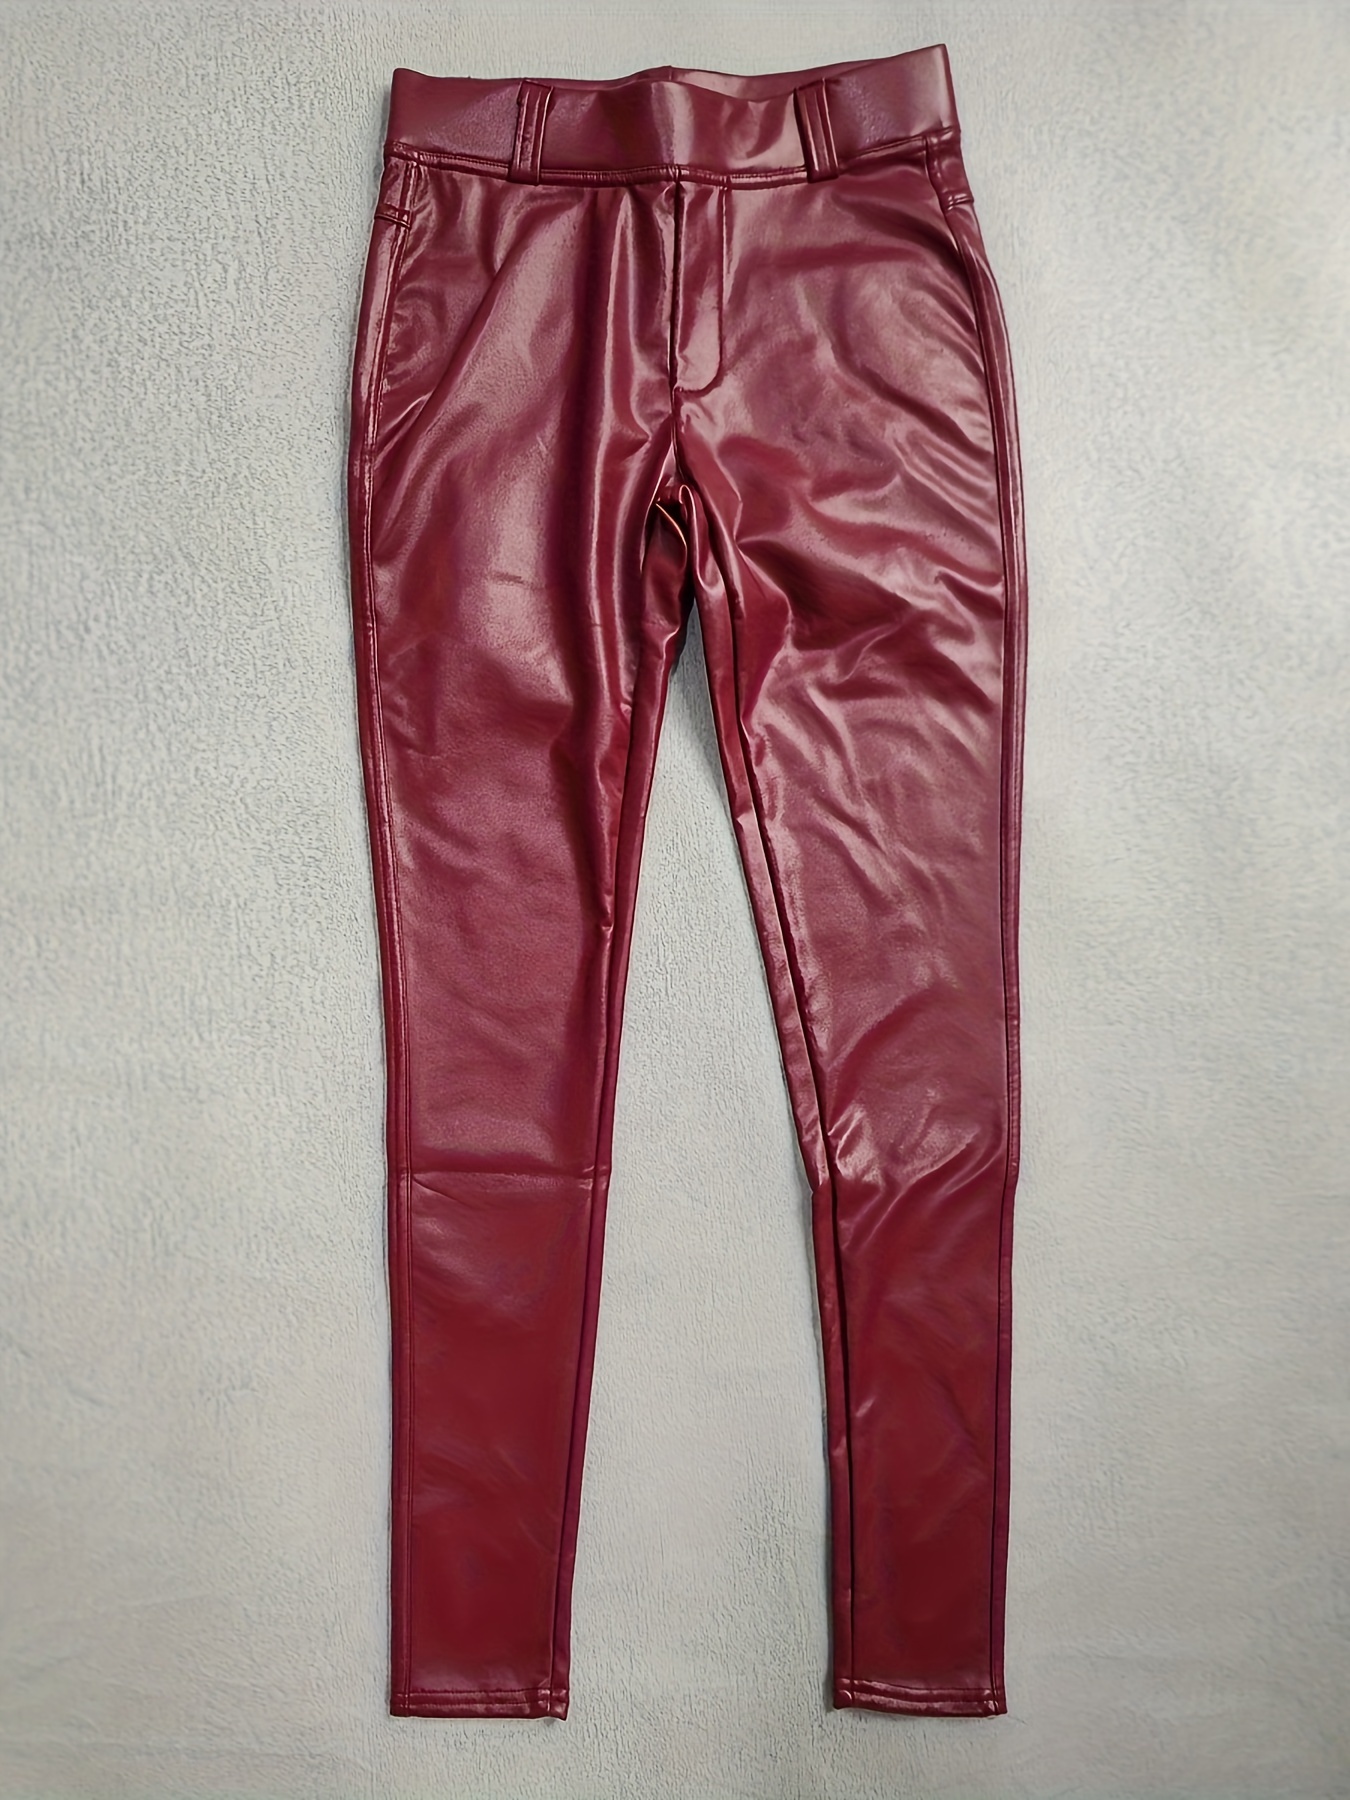 burgundy leather leggings